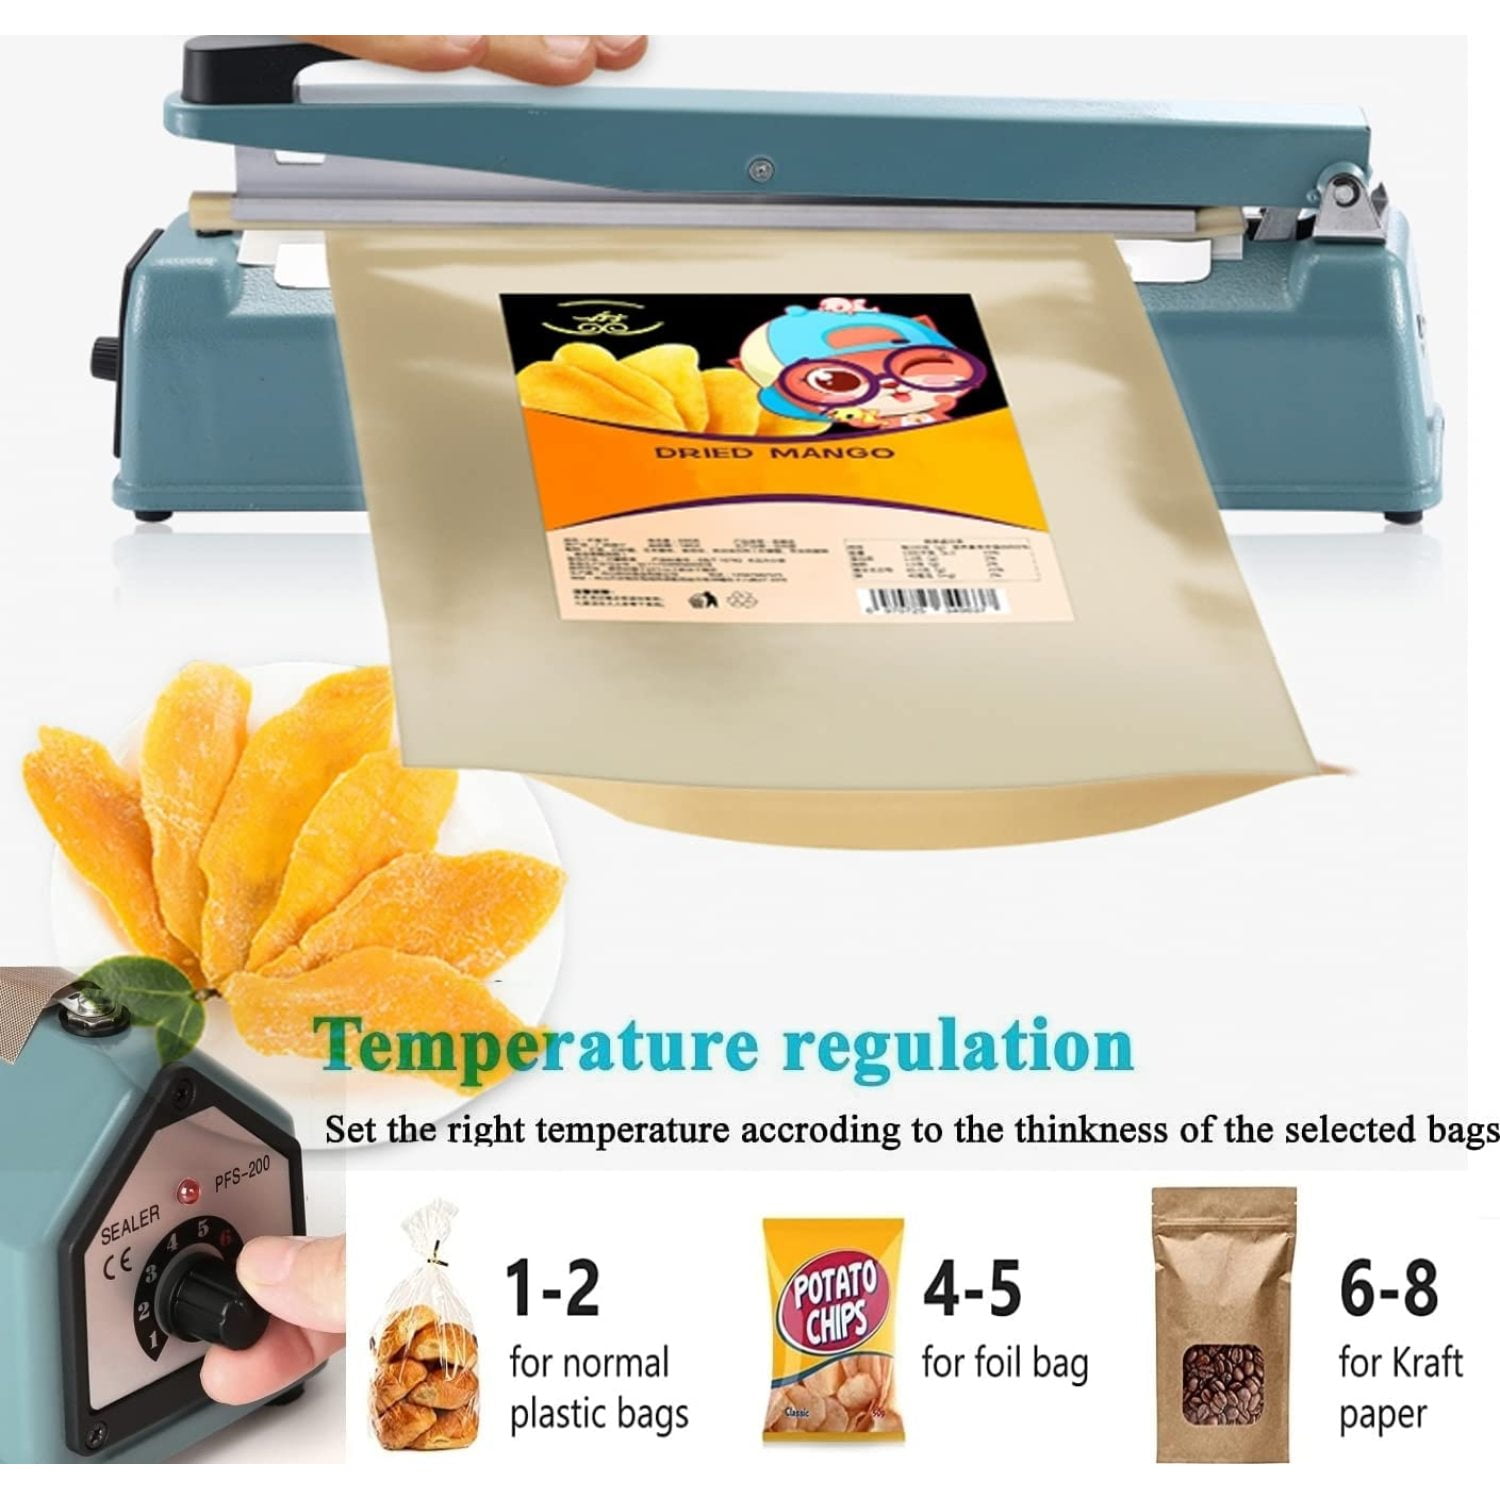 Gymax 12 Foot Pedal Impulse Sealer Heat Seal Plastic Bag Sealing Machine w/ Cutter